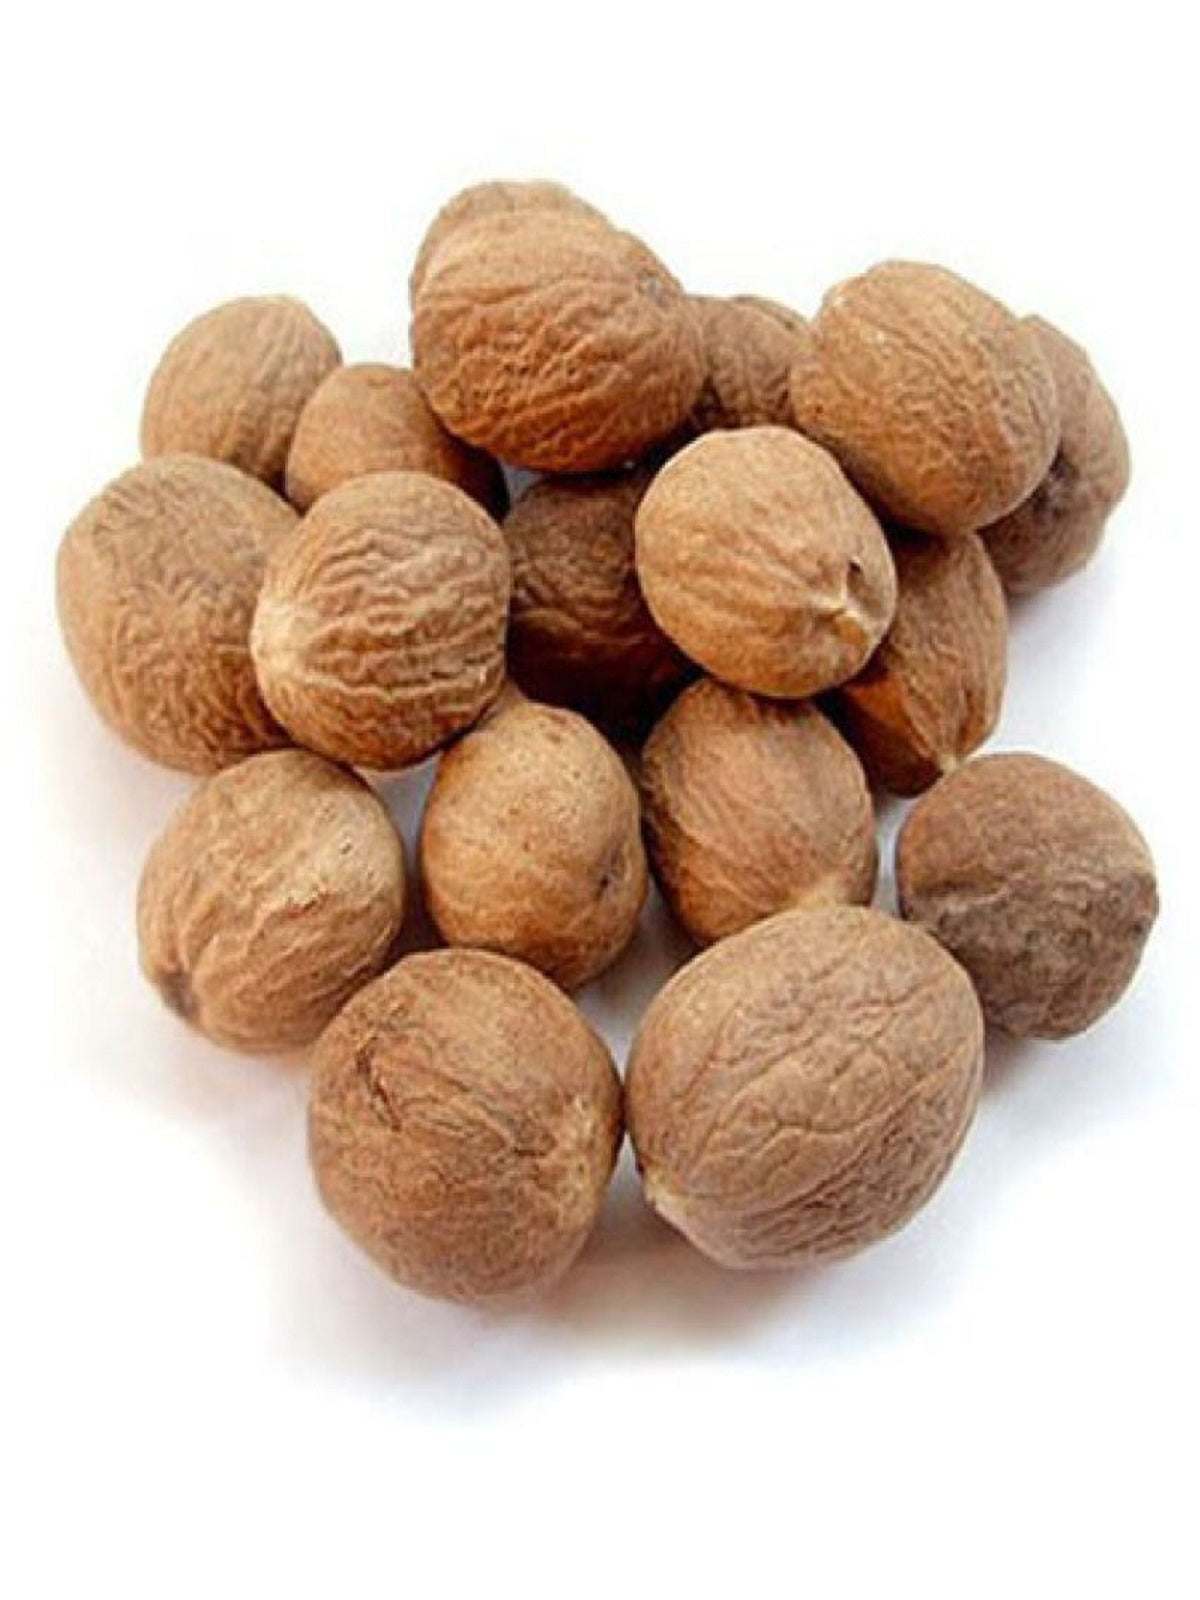 Buy the best quality Jai Faal Nutmeg online at Farmonics